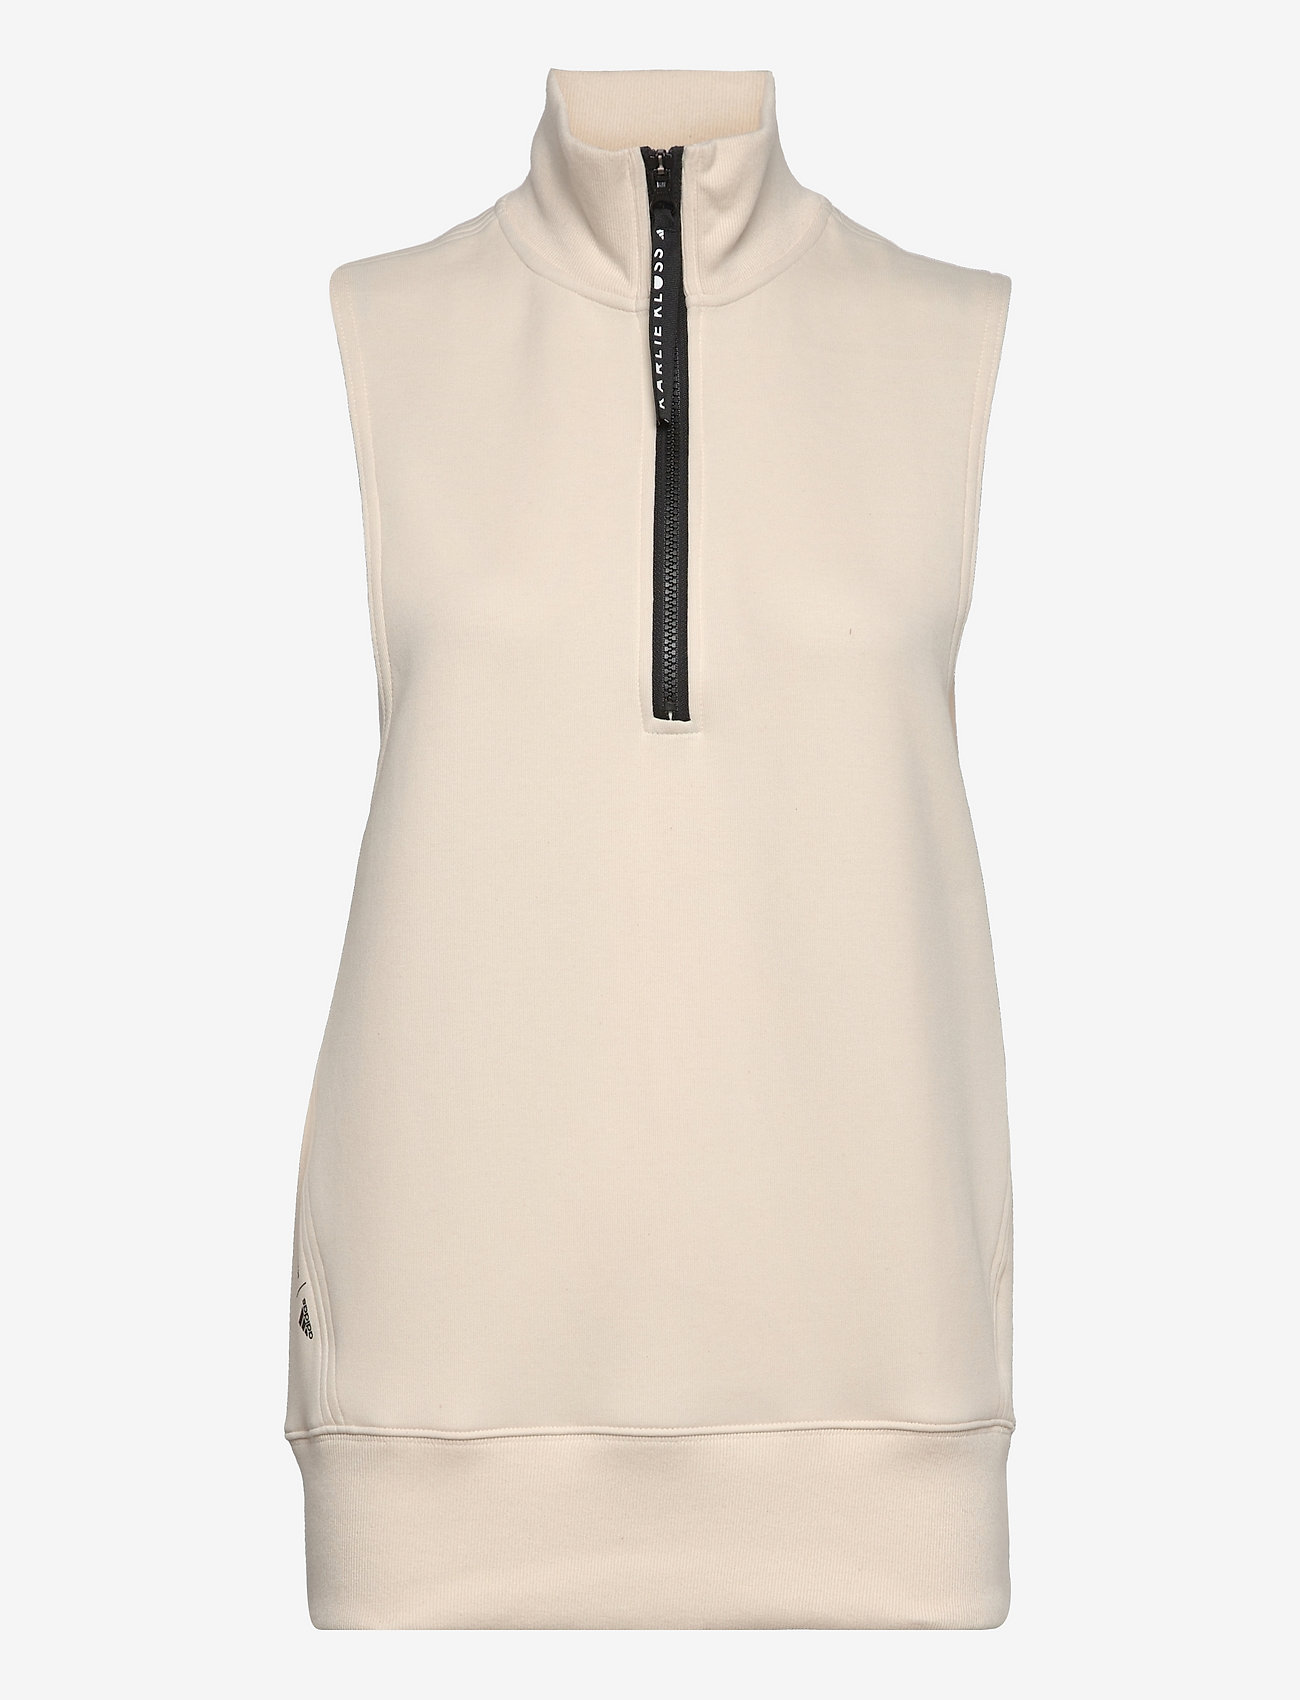 adidas Performance - Karlie Kloss Oversize Vest W - women - nondye - 0